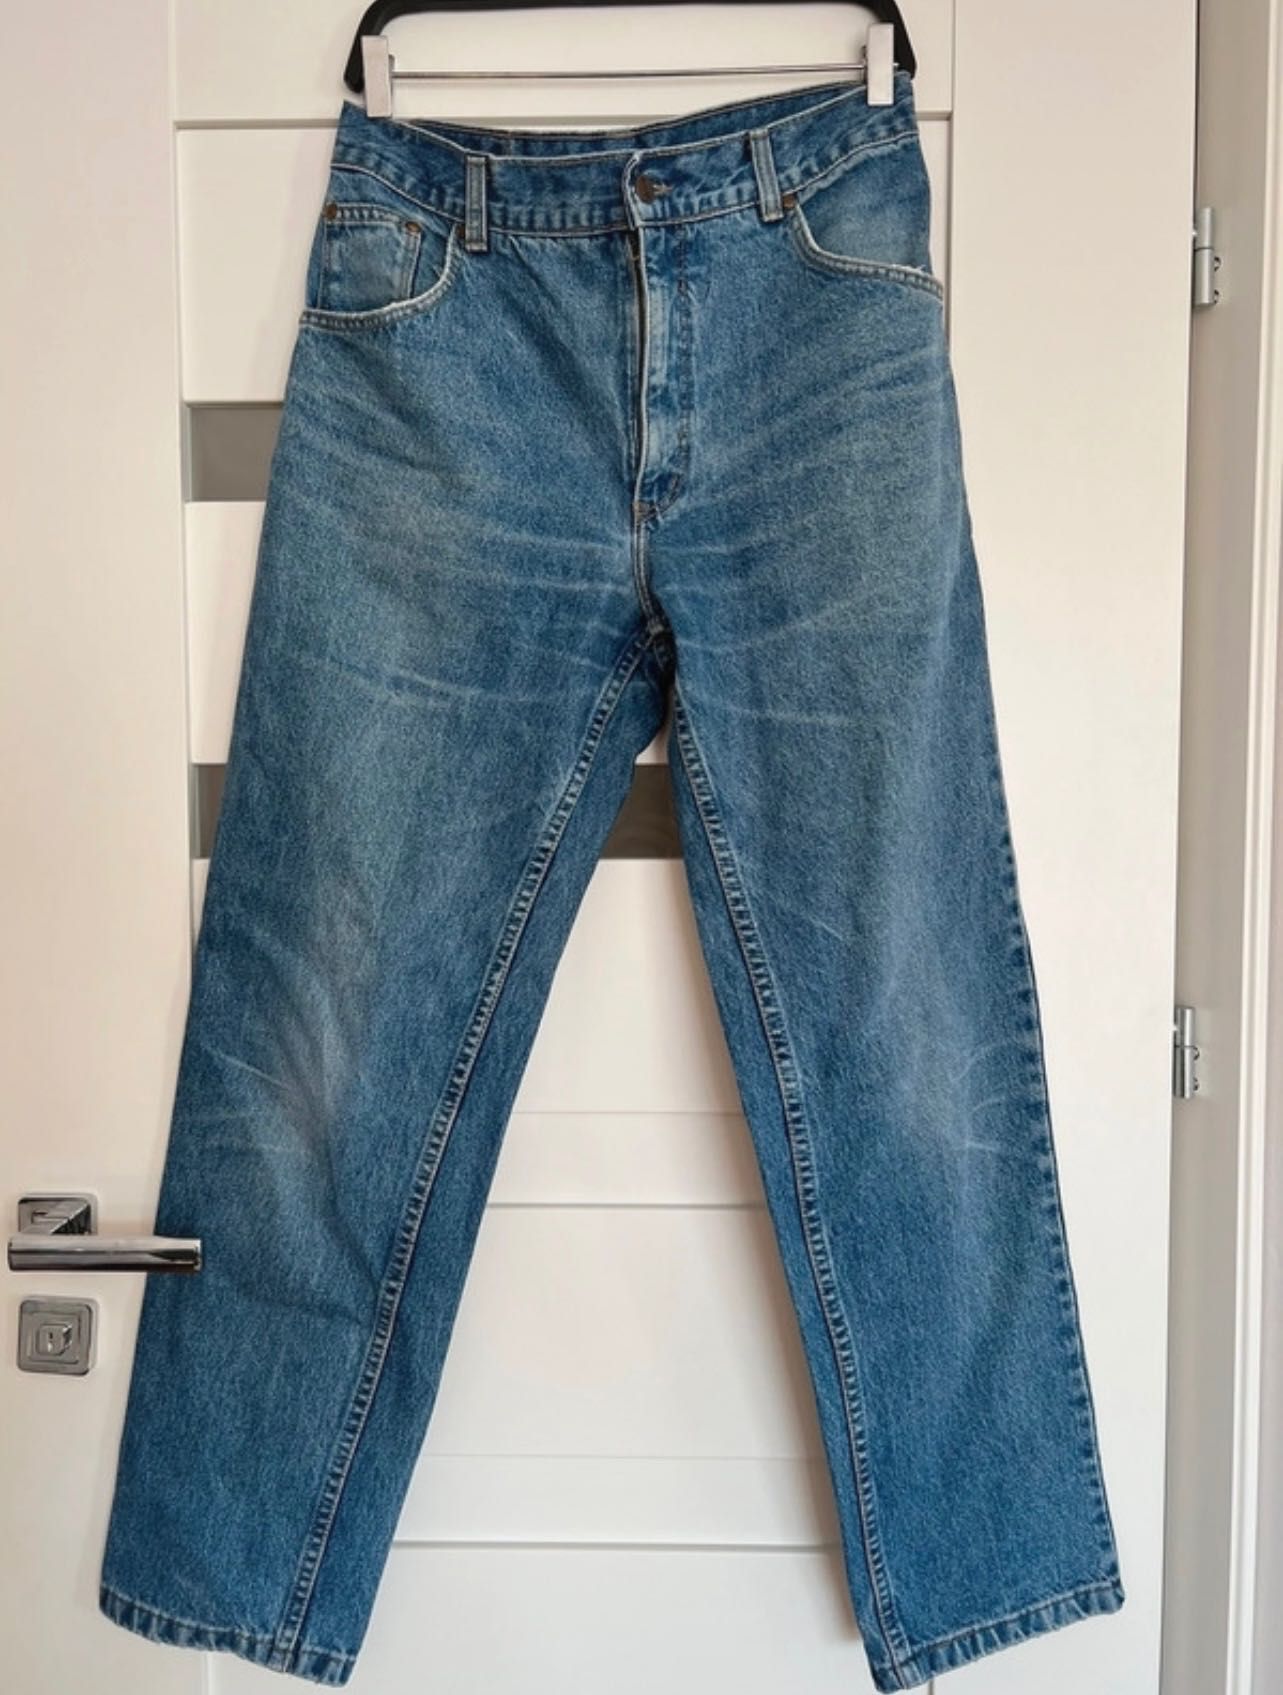 Dżinsowa spodnie proste Jinglers 34/32 Vintage jeans